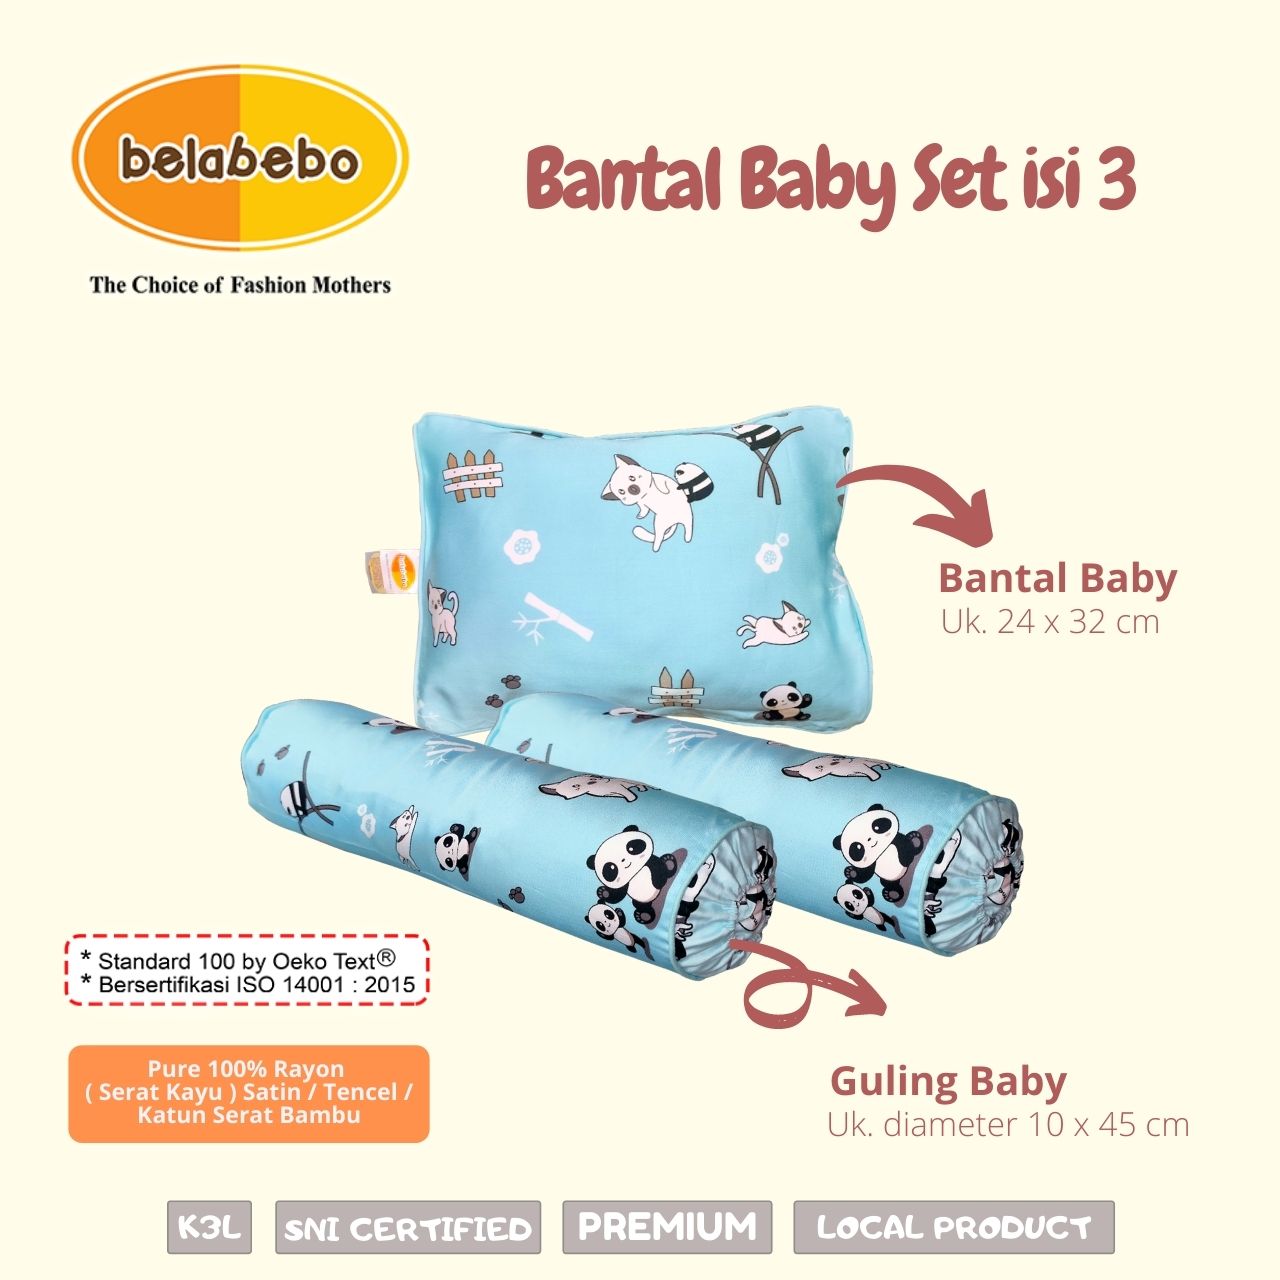 Bantal Baby set isi 3 belabebo